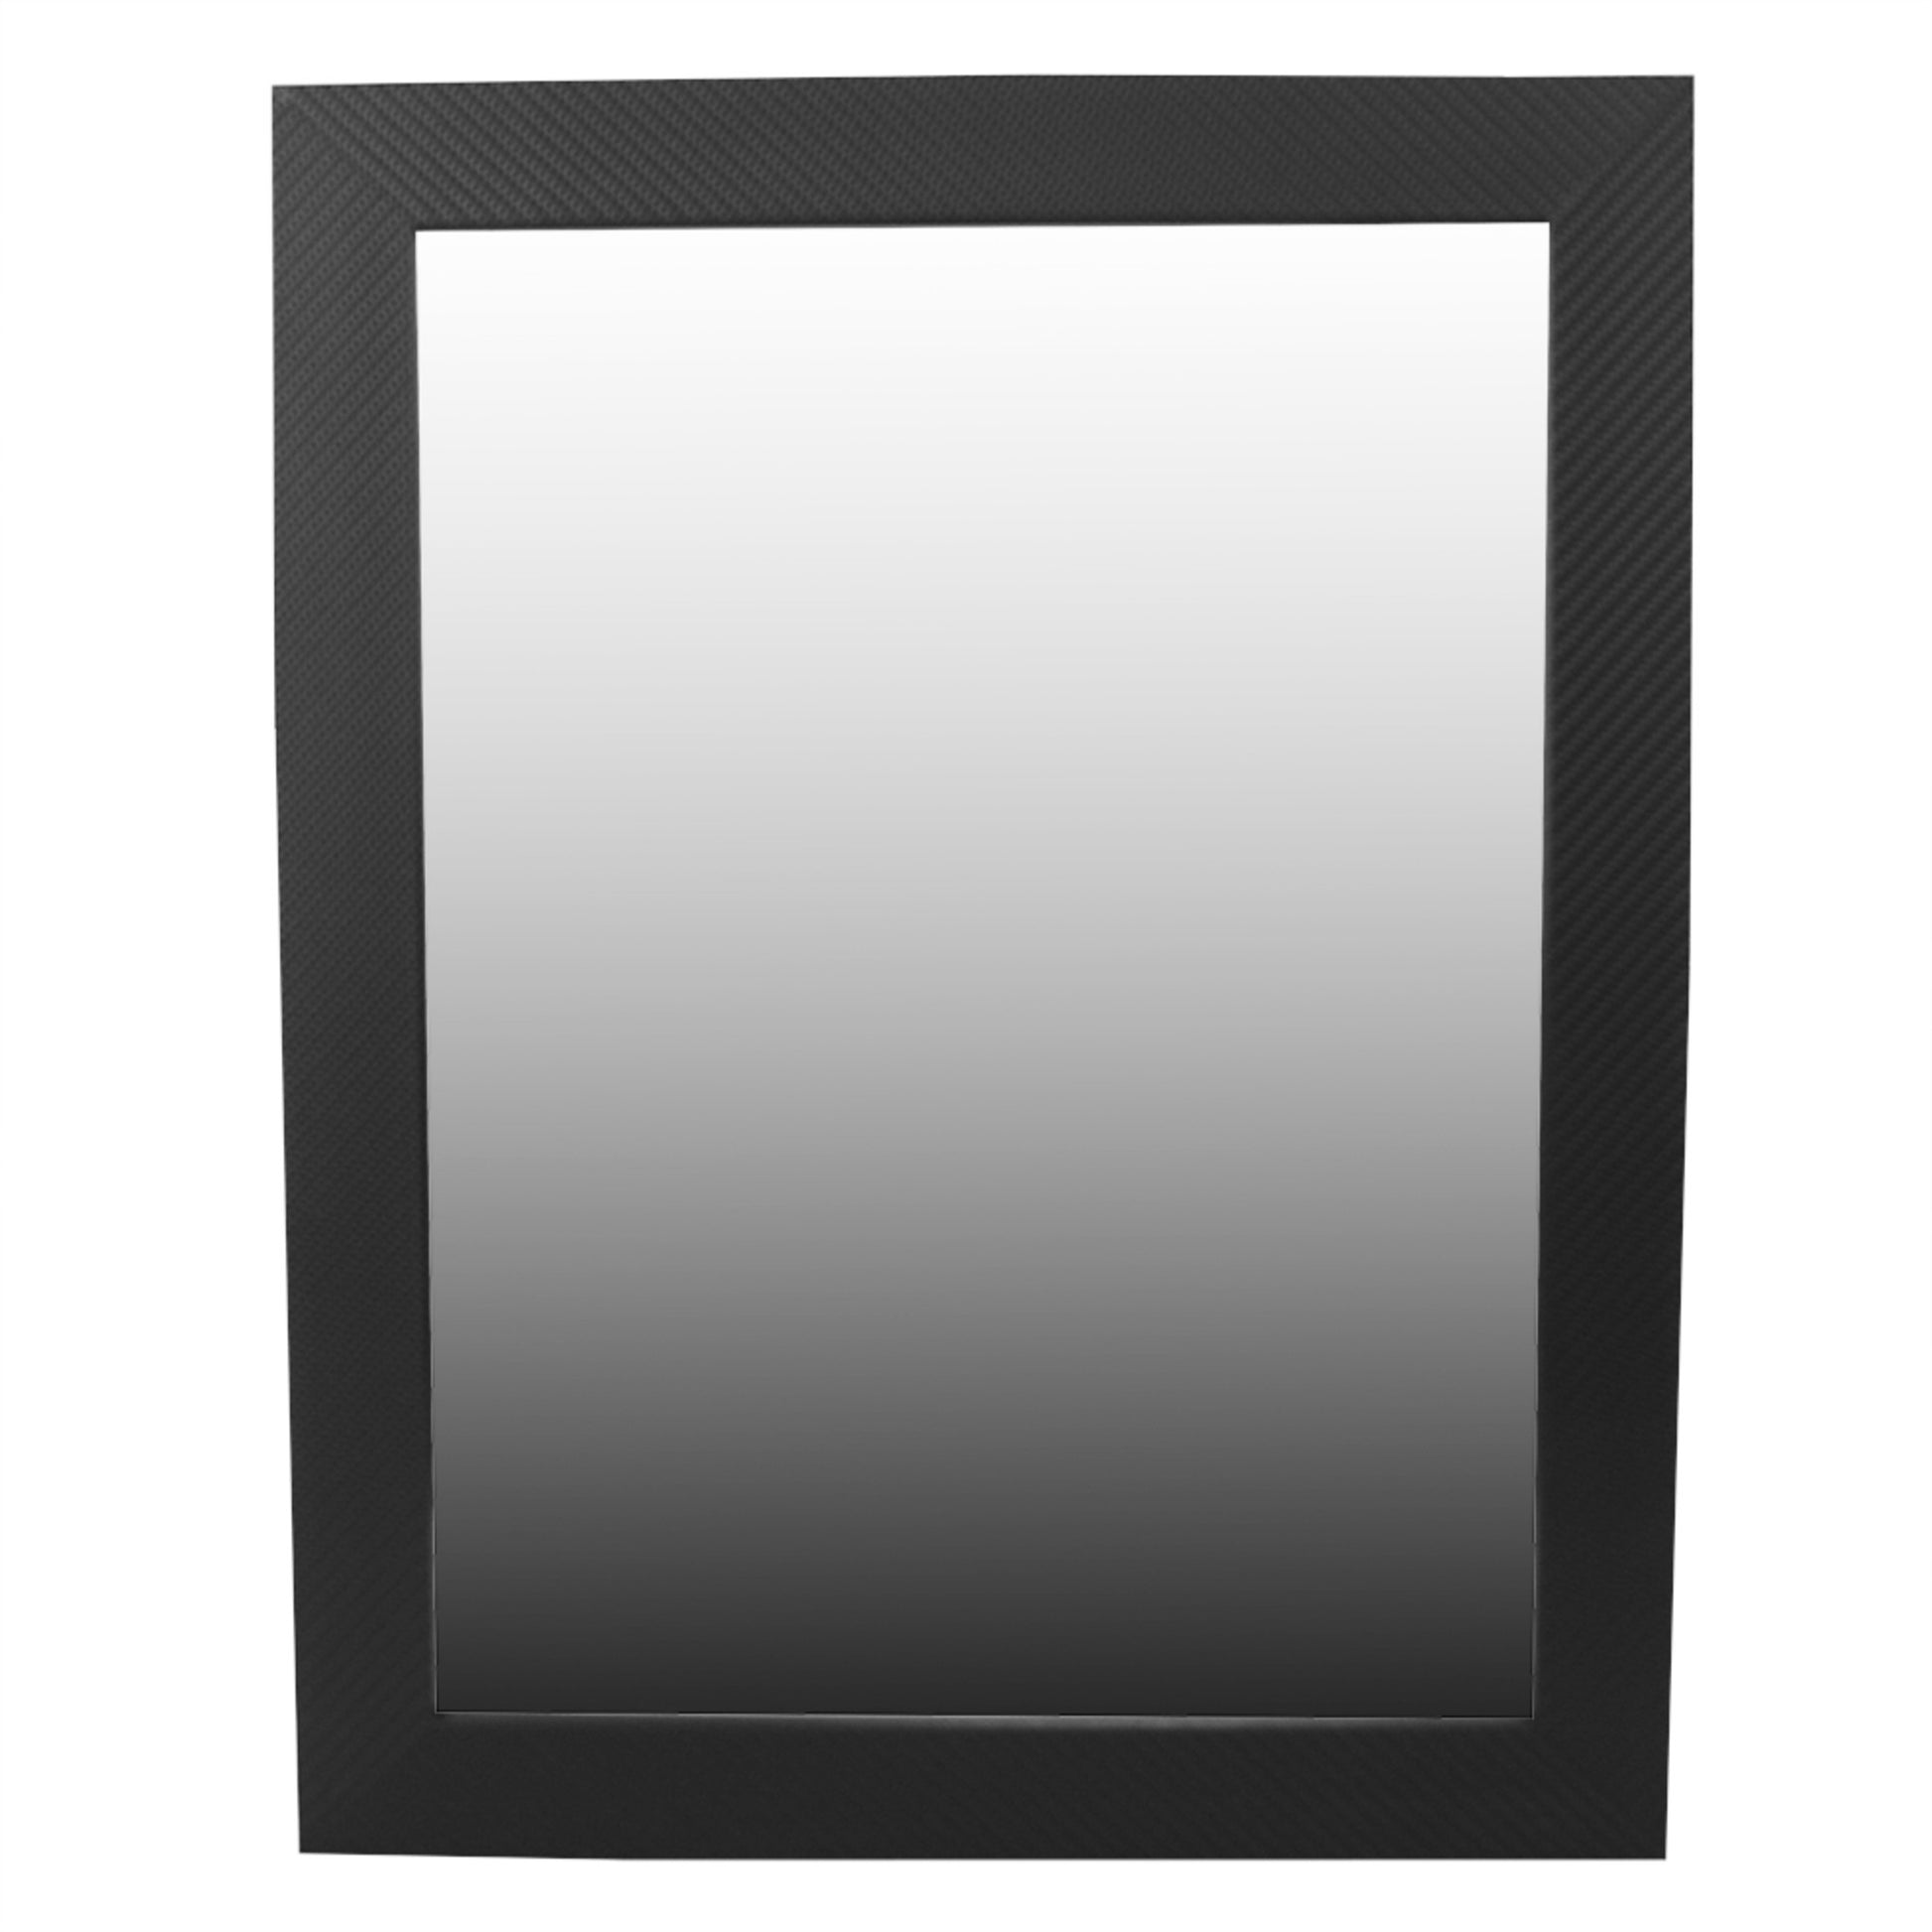 Home Basics Wall Mirror, Black - Black